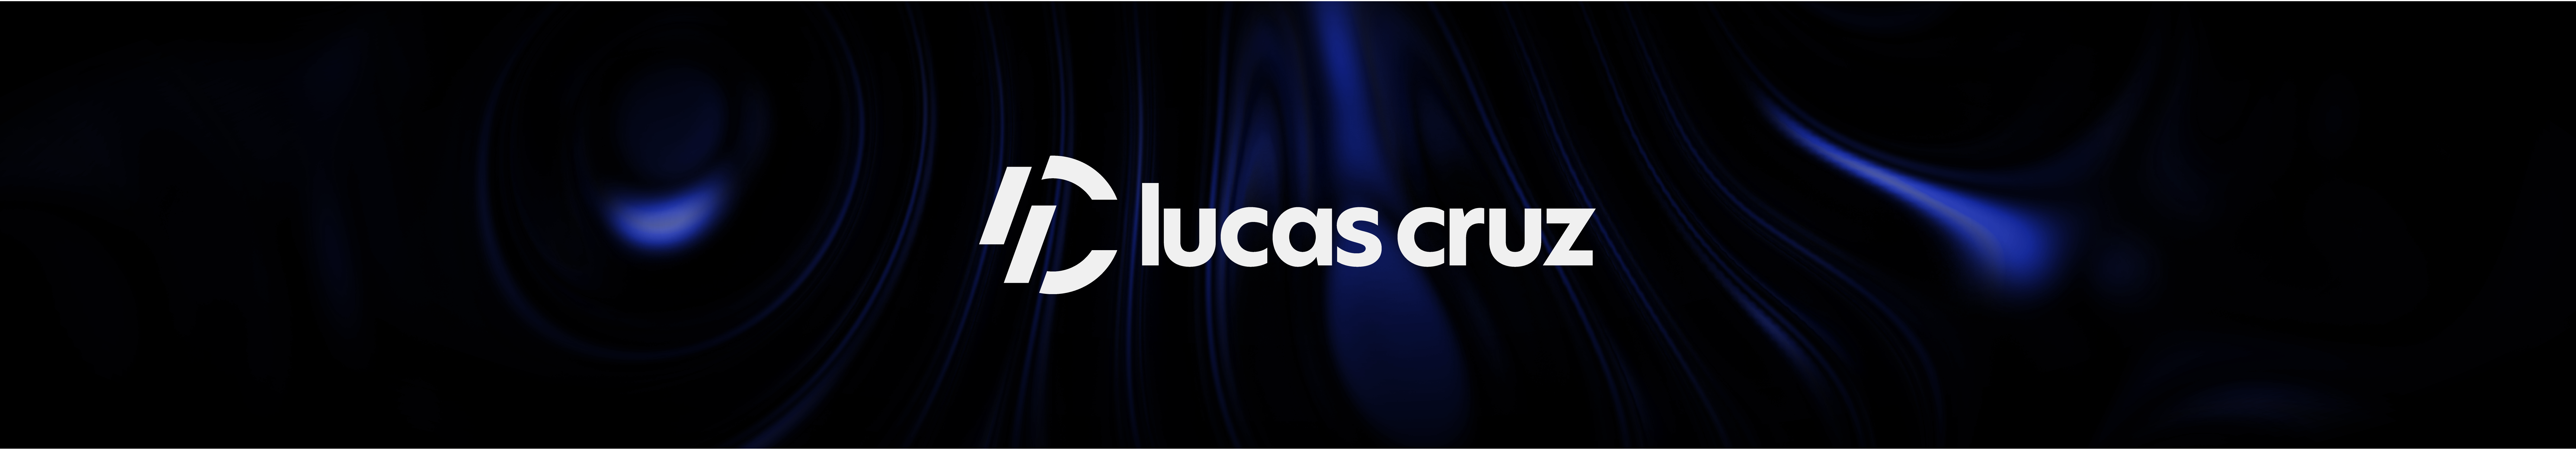 Lucas Cruz's profile banner